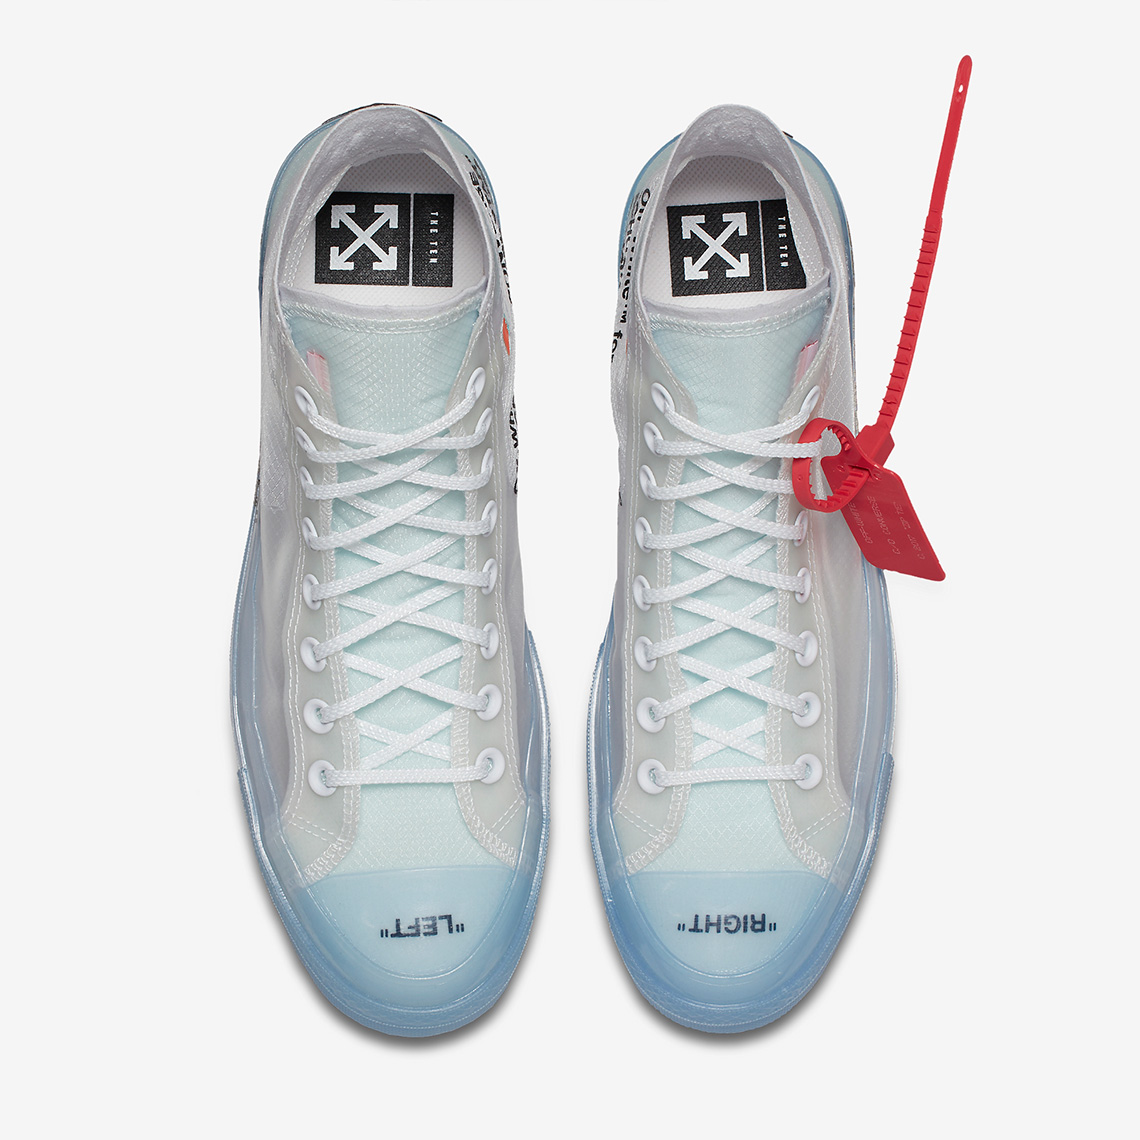 STORE LIST: OFF WHITE x Chuck | SneakerNews.com